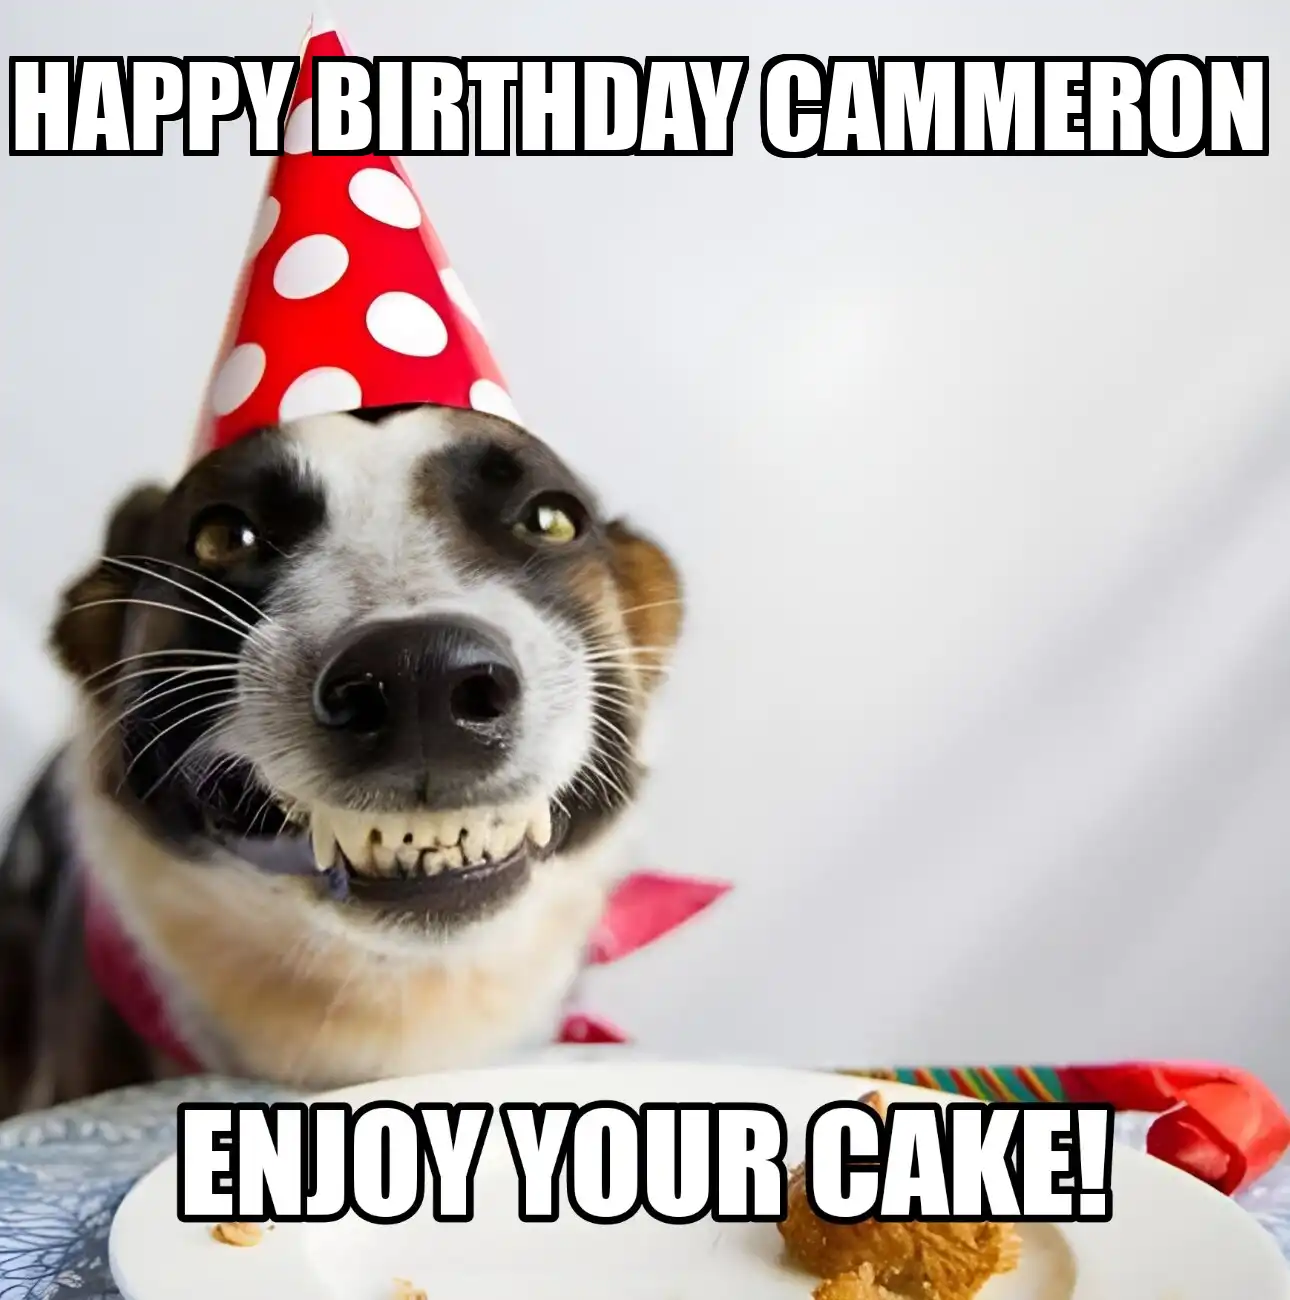 Happy Birthday Cammeron Enjoy Your Cake Dog Meme